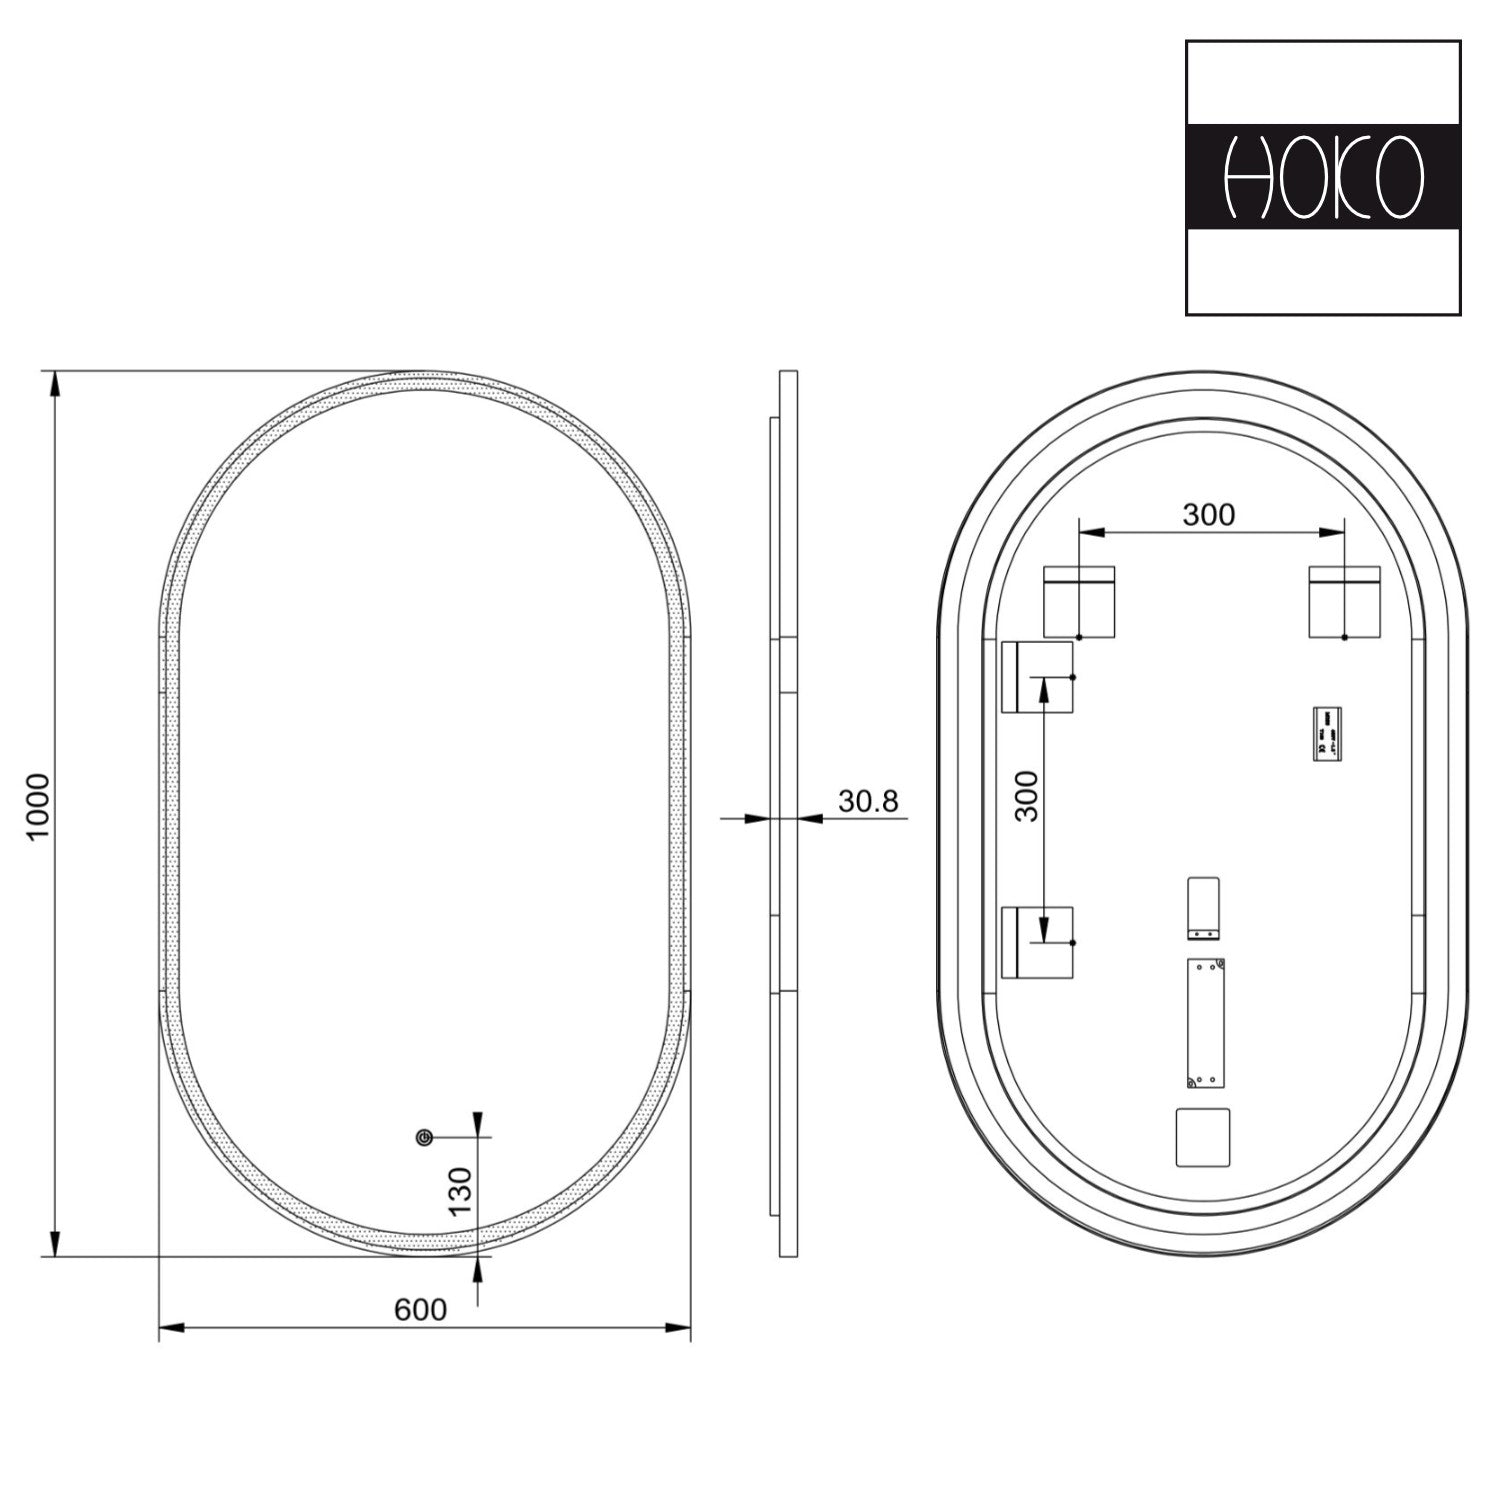 LED design bathroom mirror oval with metal frame matt black. Vertical & horizontal hanging. LED bathroom mirror / dressing table mirror. Light change warm white / cool white